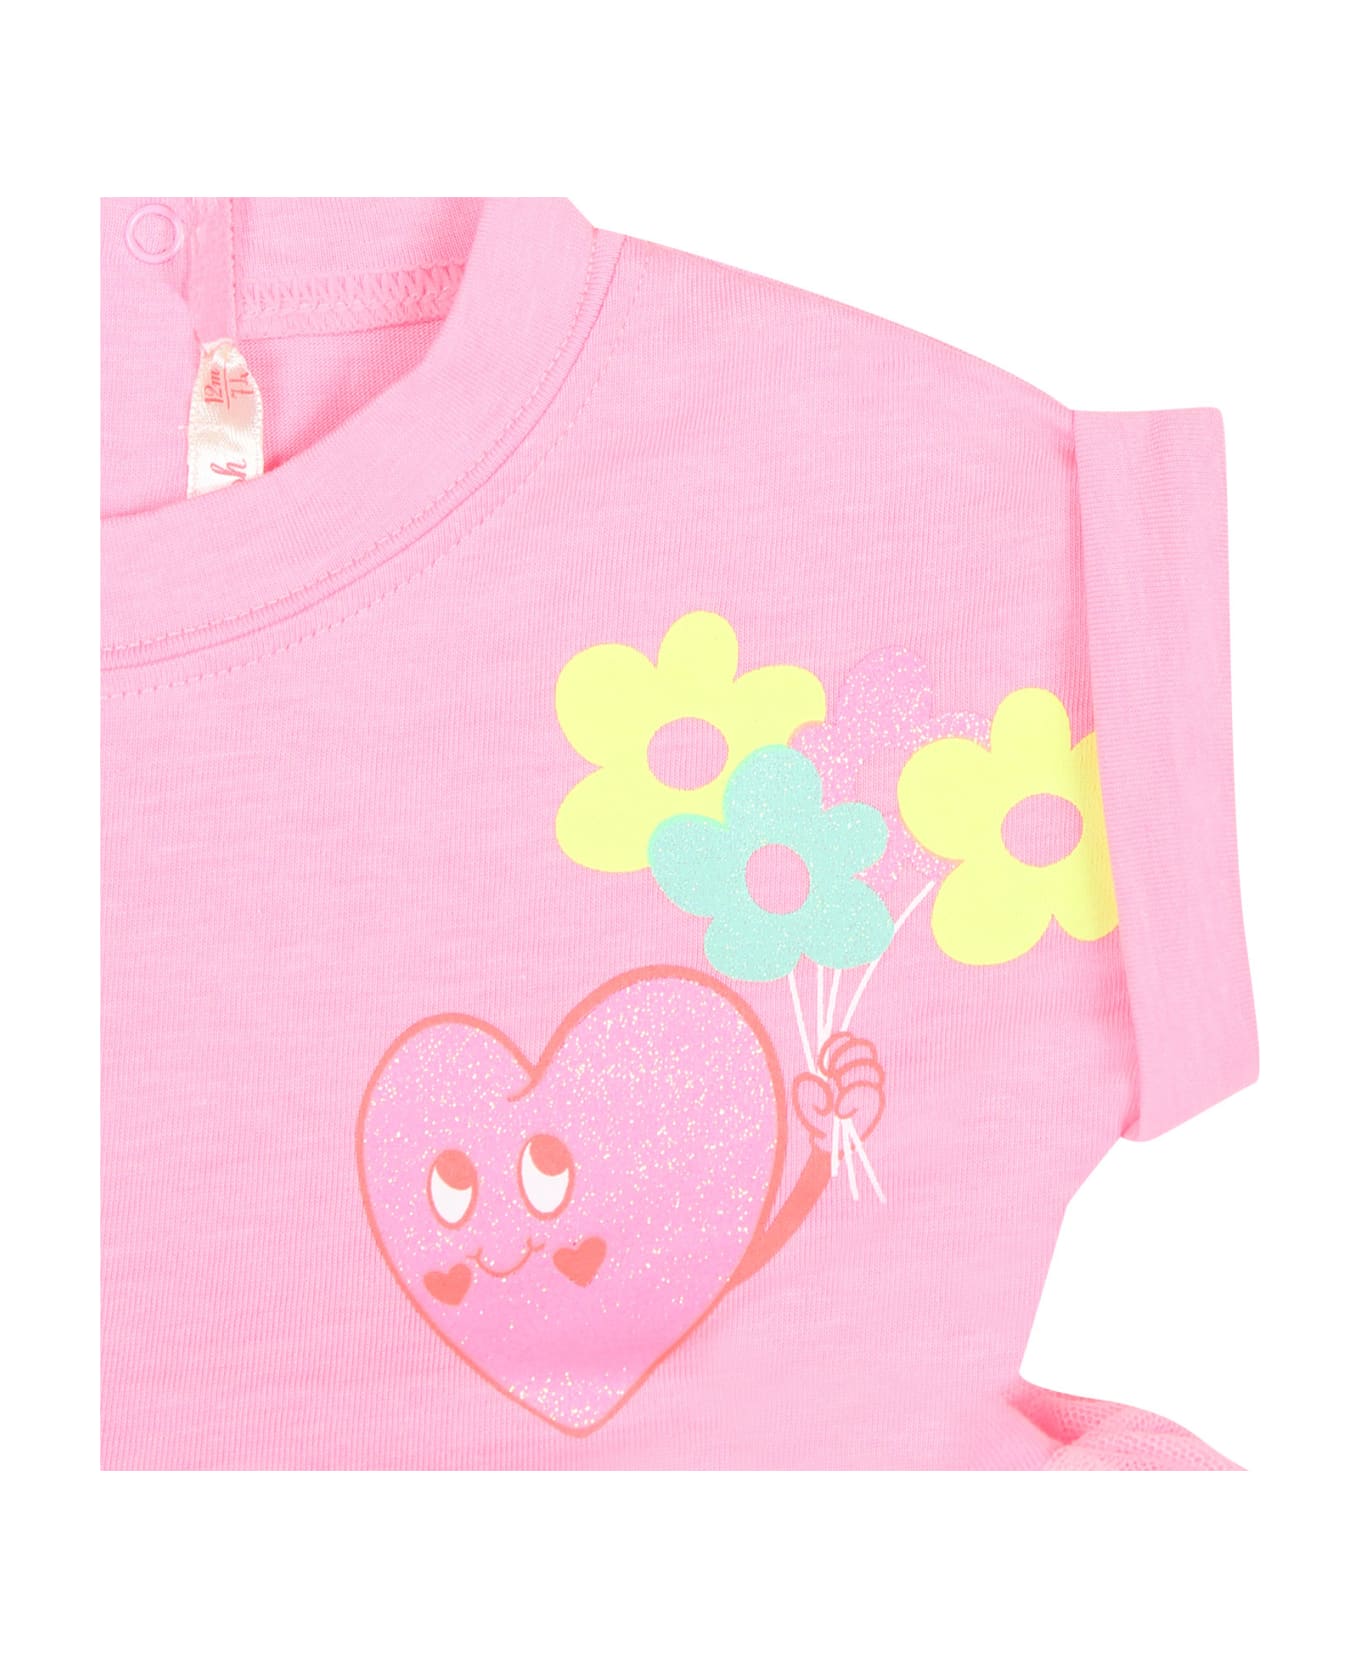 Billieblush Fuchsia Dress For Baby Girl With Multicolor Print - Fuchsia